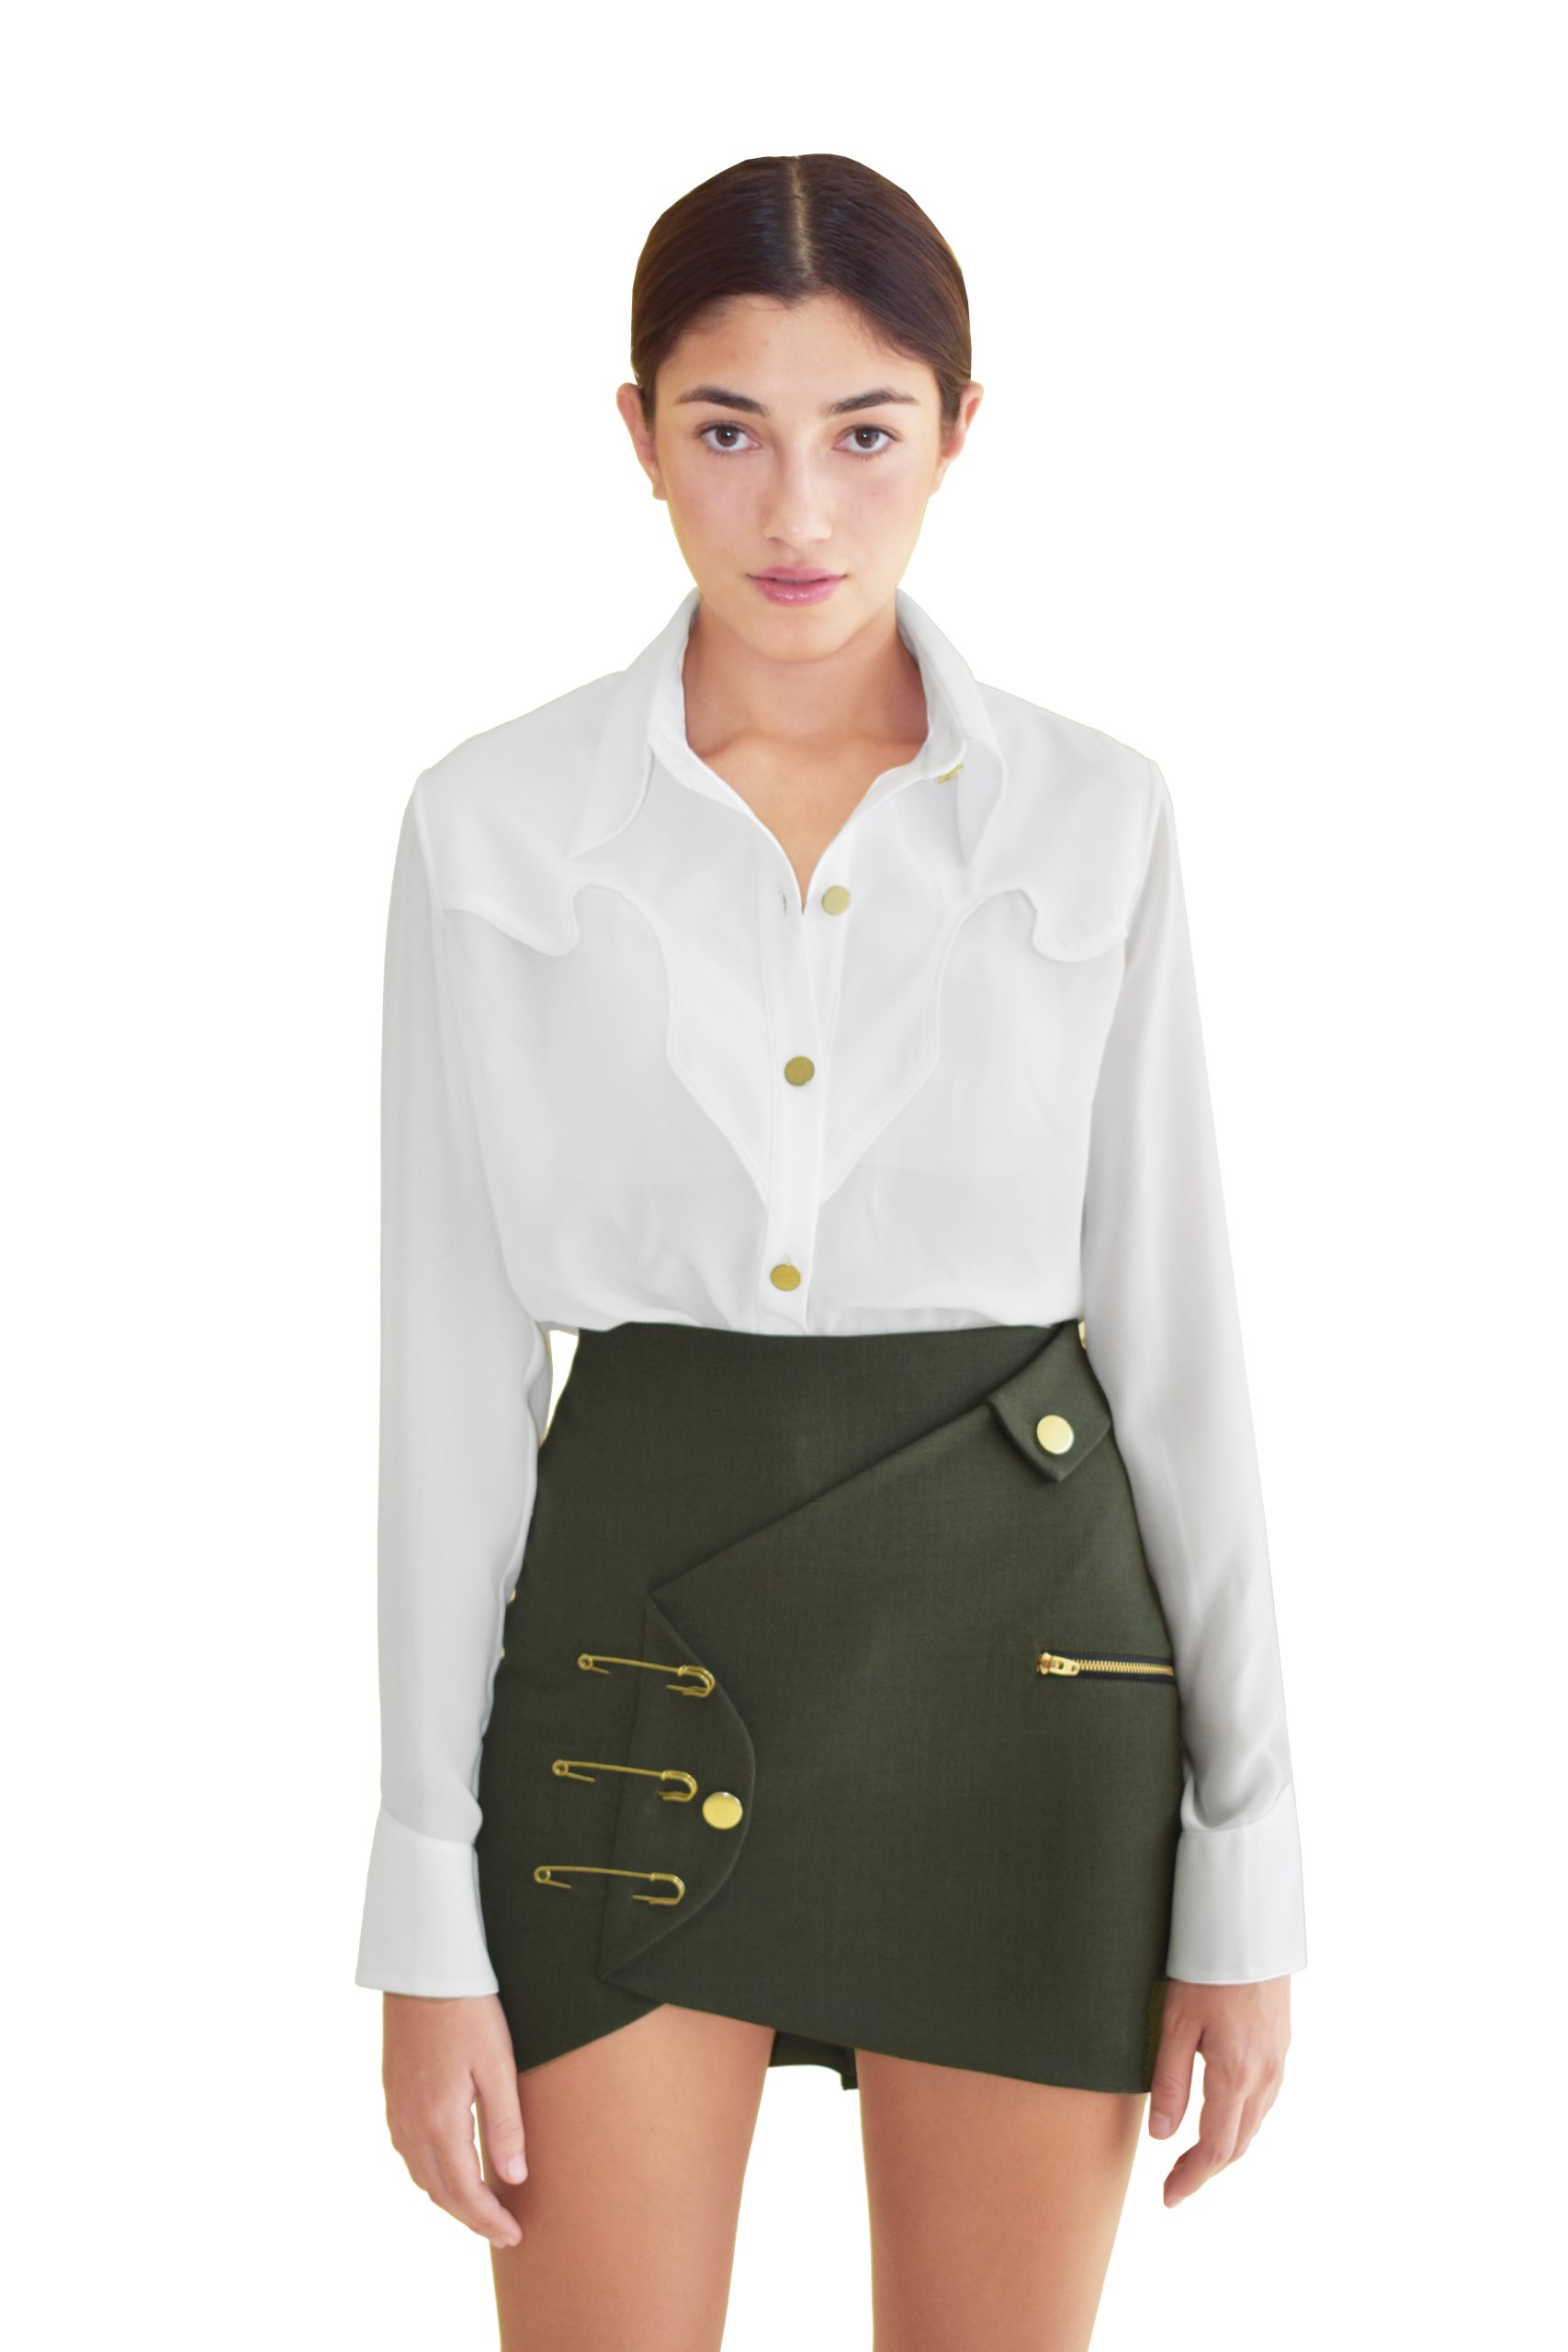 At Ease Military Skirt » Luciana Balderrama